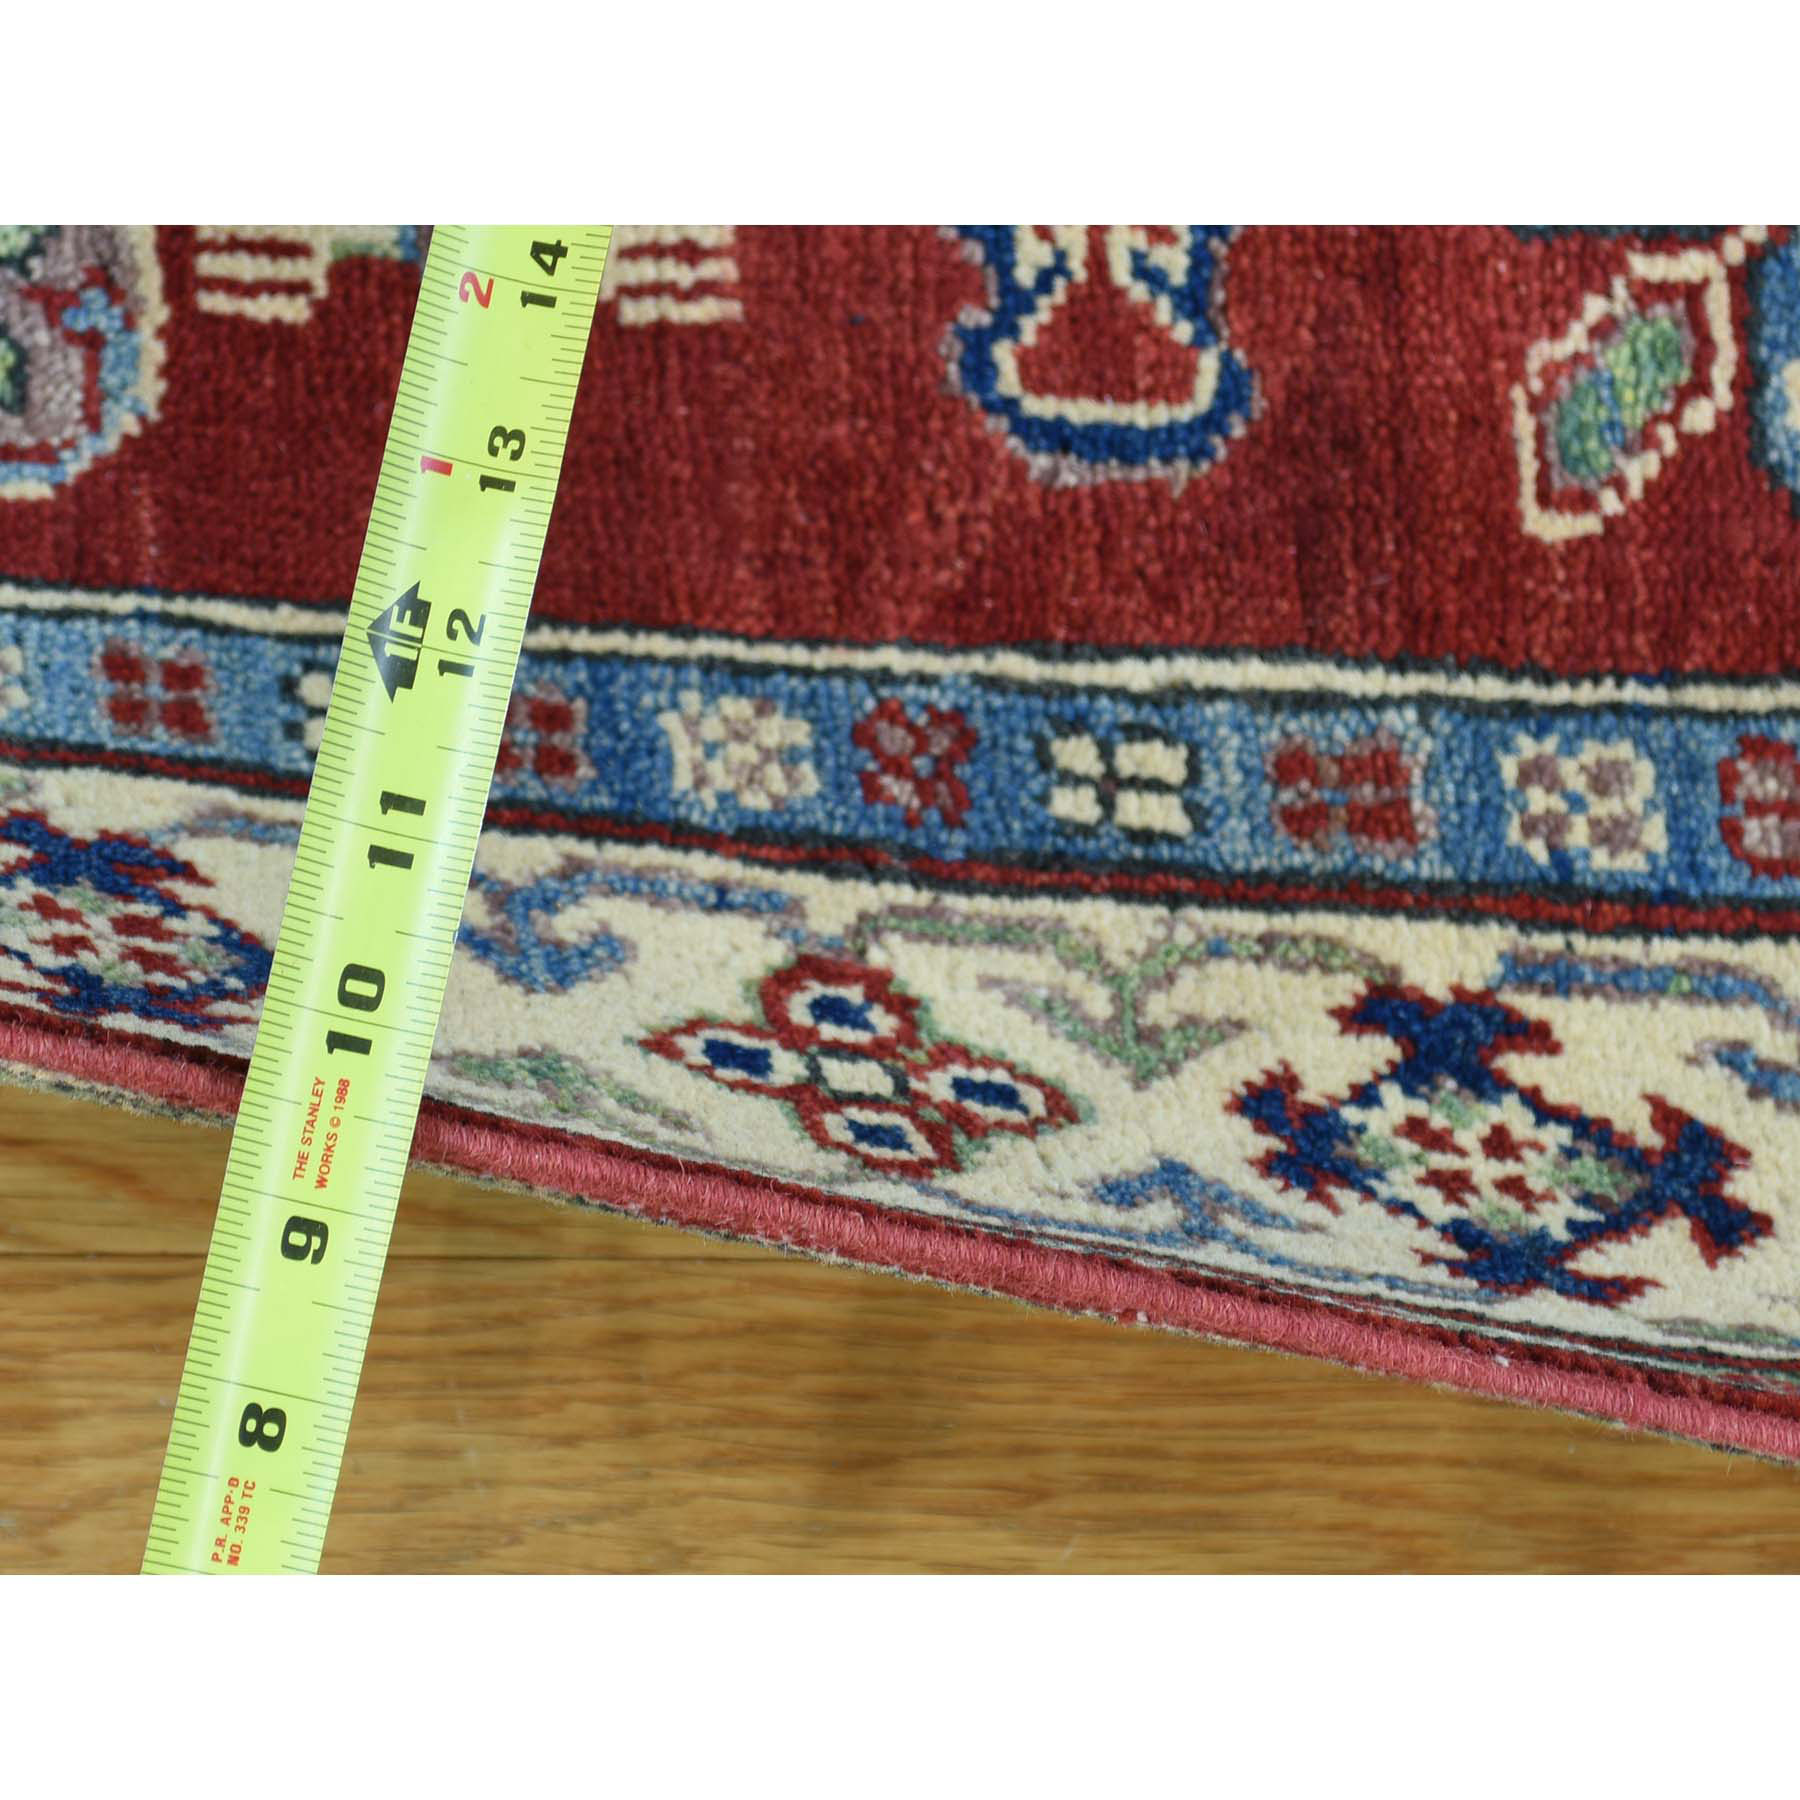 4-1 x5-9  Pure Wool Hand-Knotted Tribal Design Kazak Oriental Rug 